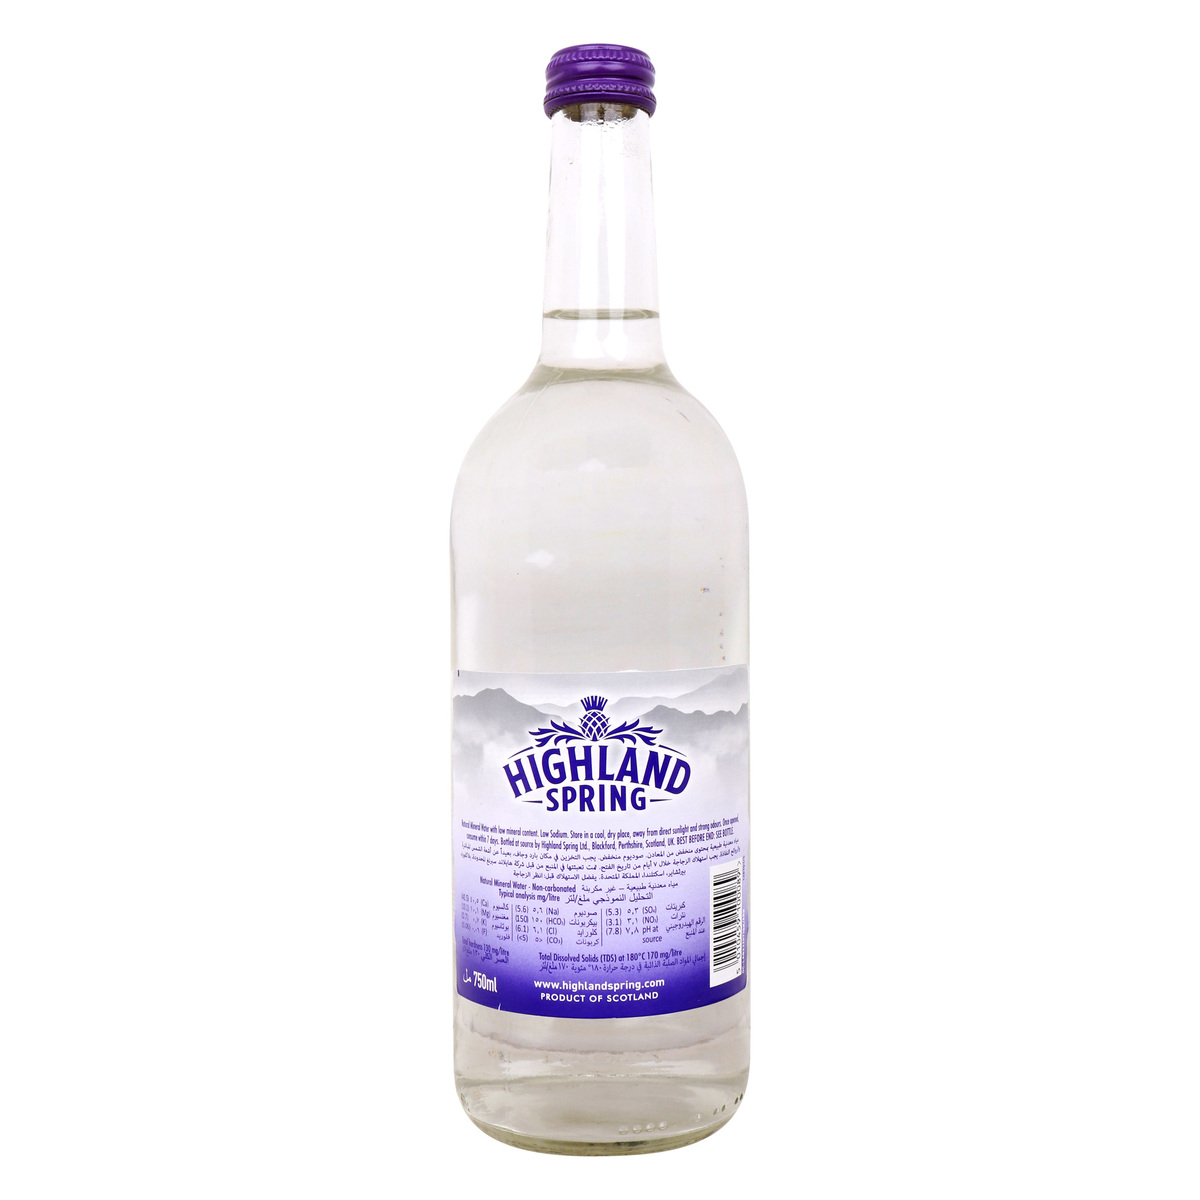 Highland Natural Mineral Still Water Glass Bottle 750 ml